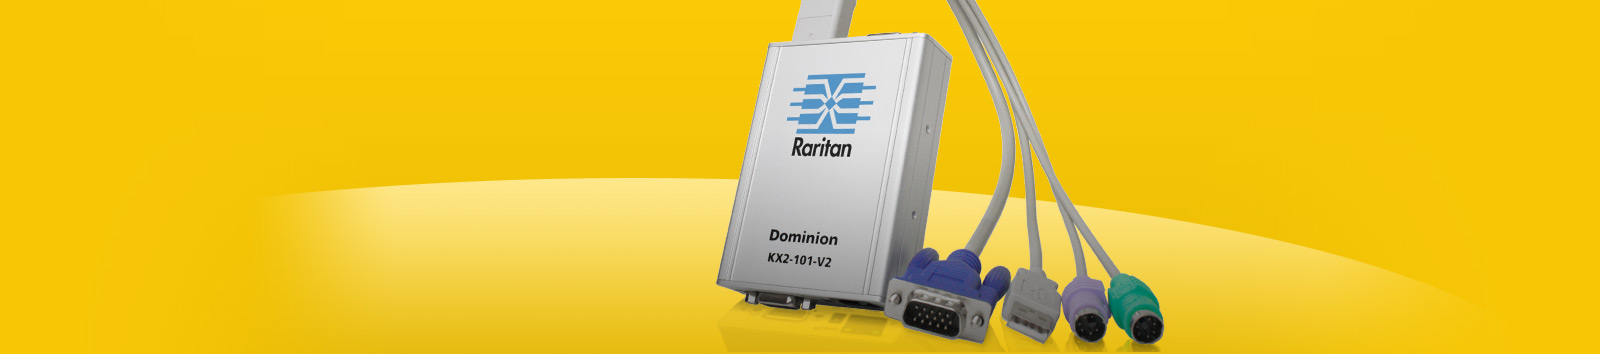 Raritan Dominion DKX2-101-V2 1 User KVM Over IP KVM Gateway